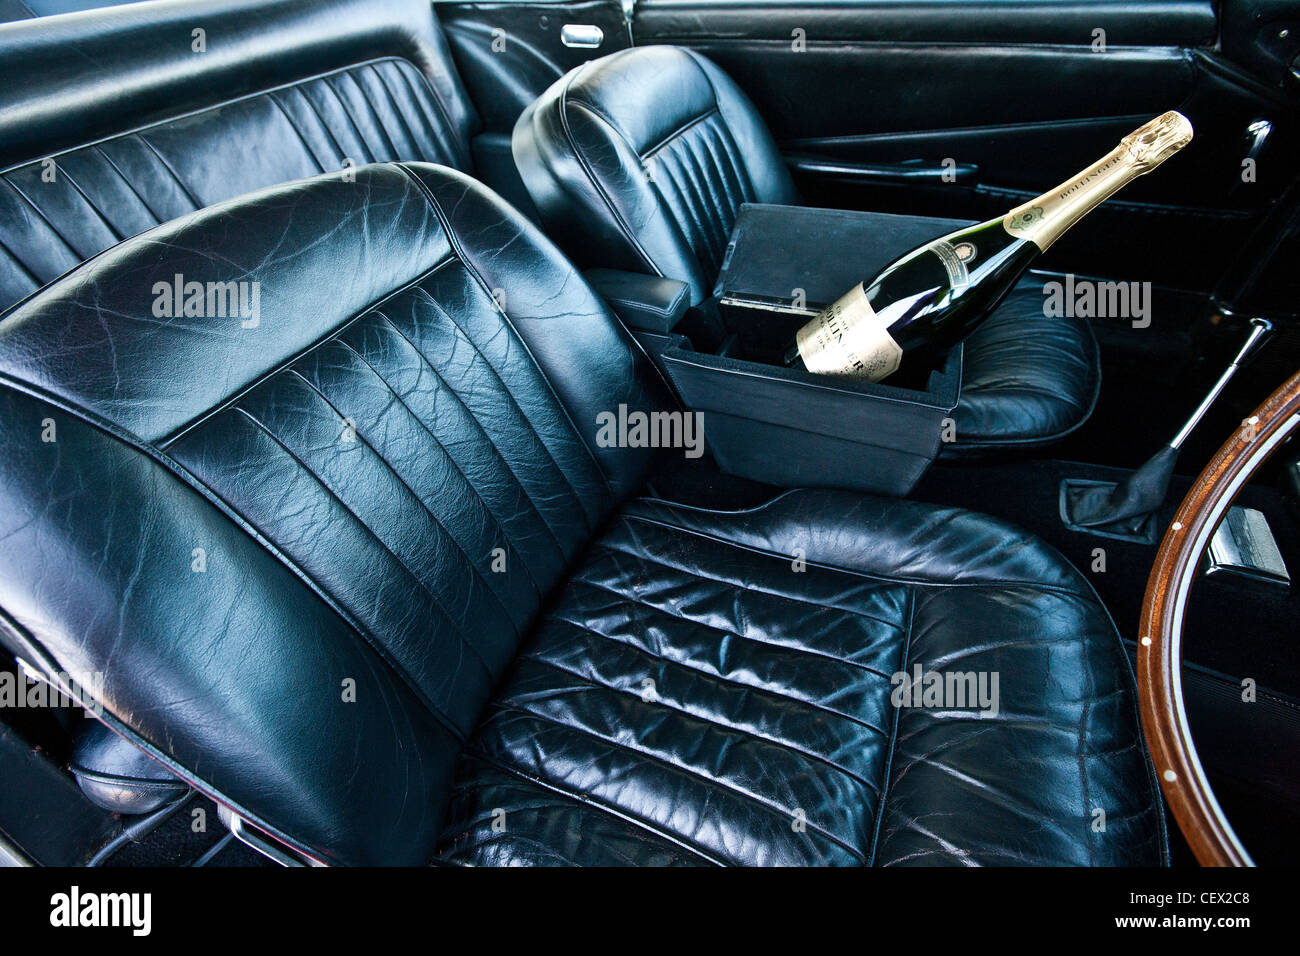 Drivers seat in Aston Martin DB5, James Bond classic car Stock Photo